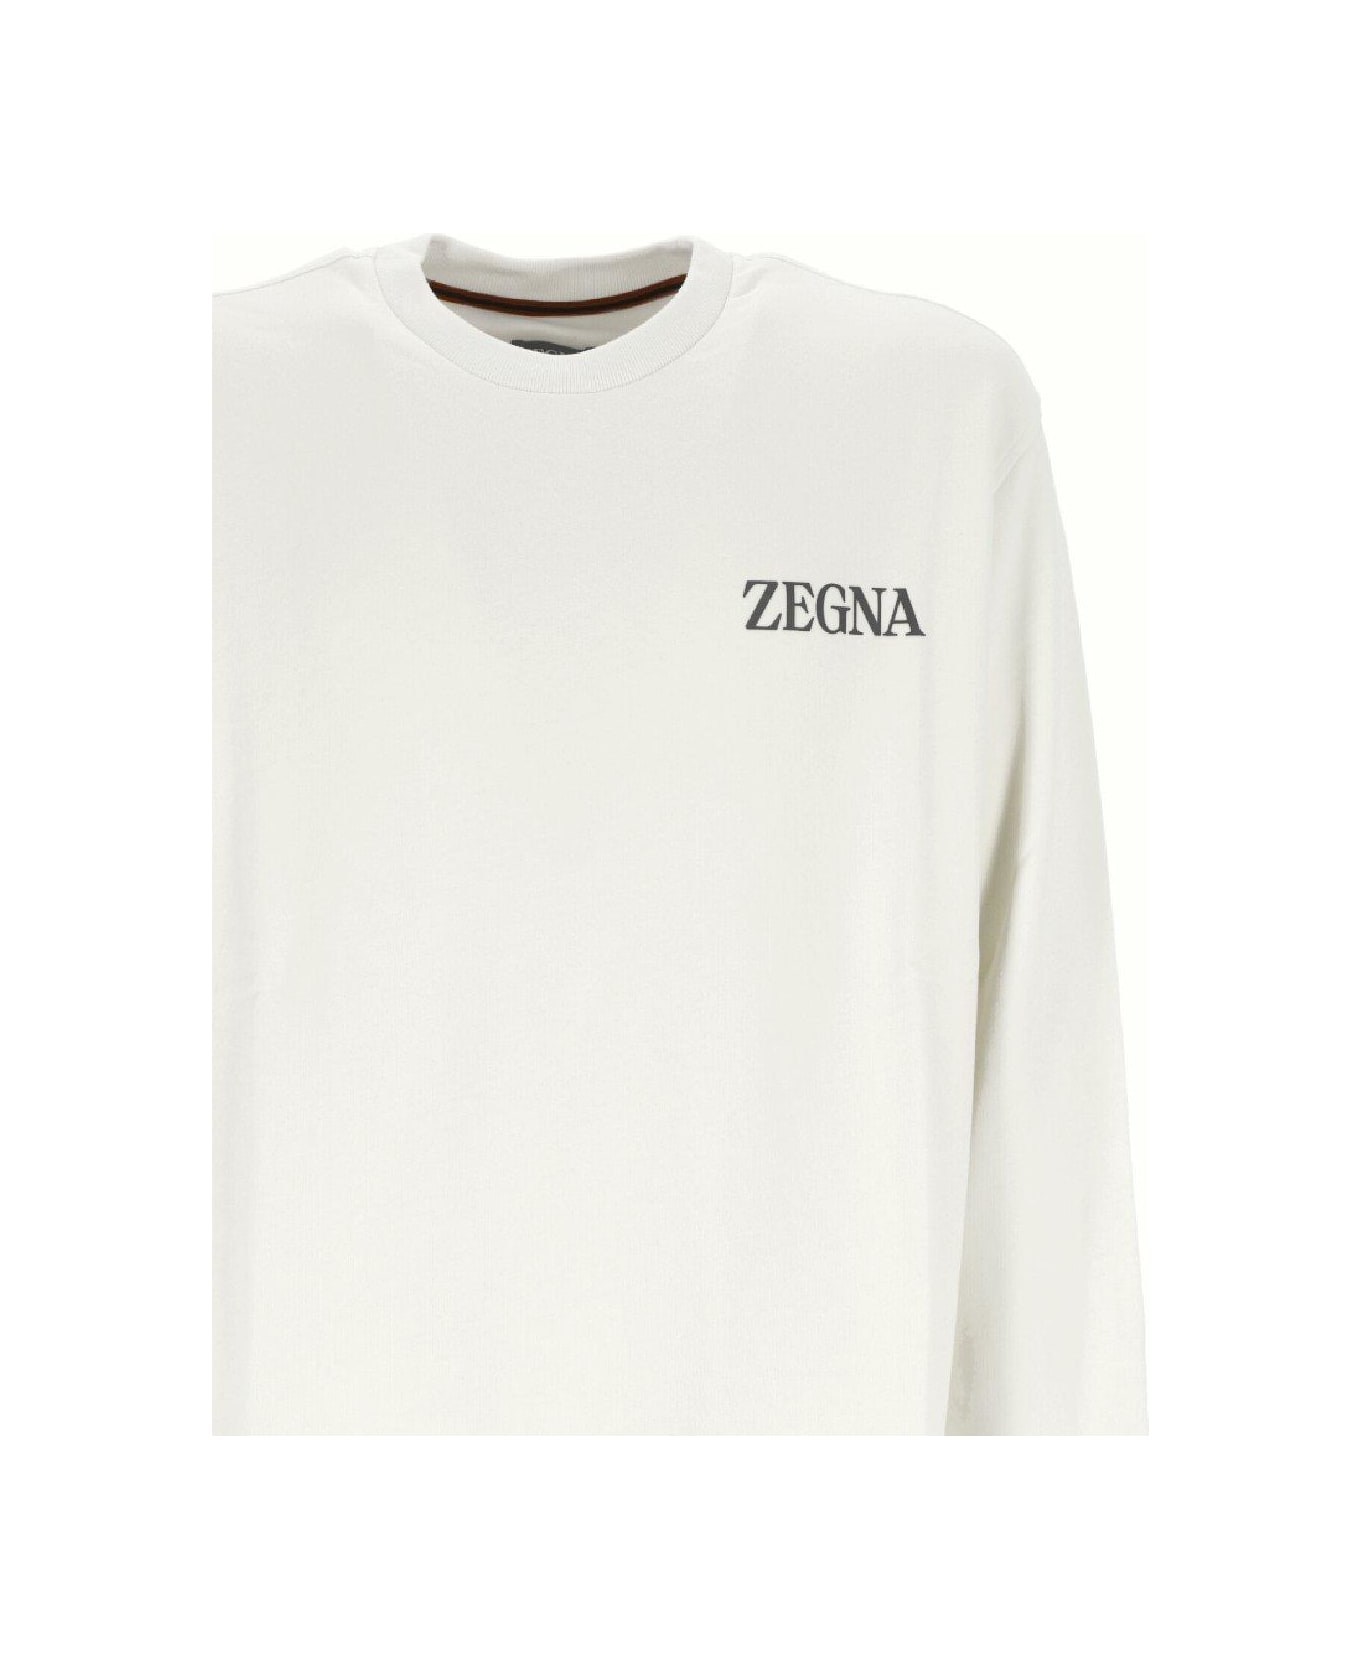 Zegna Logo Prrinted Crewneck Sweatshirt フリース